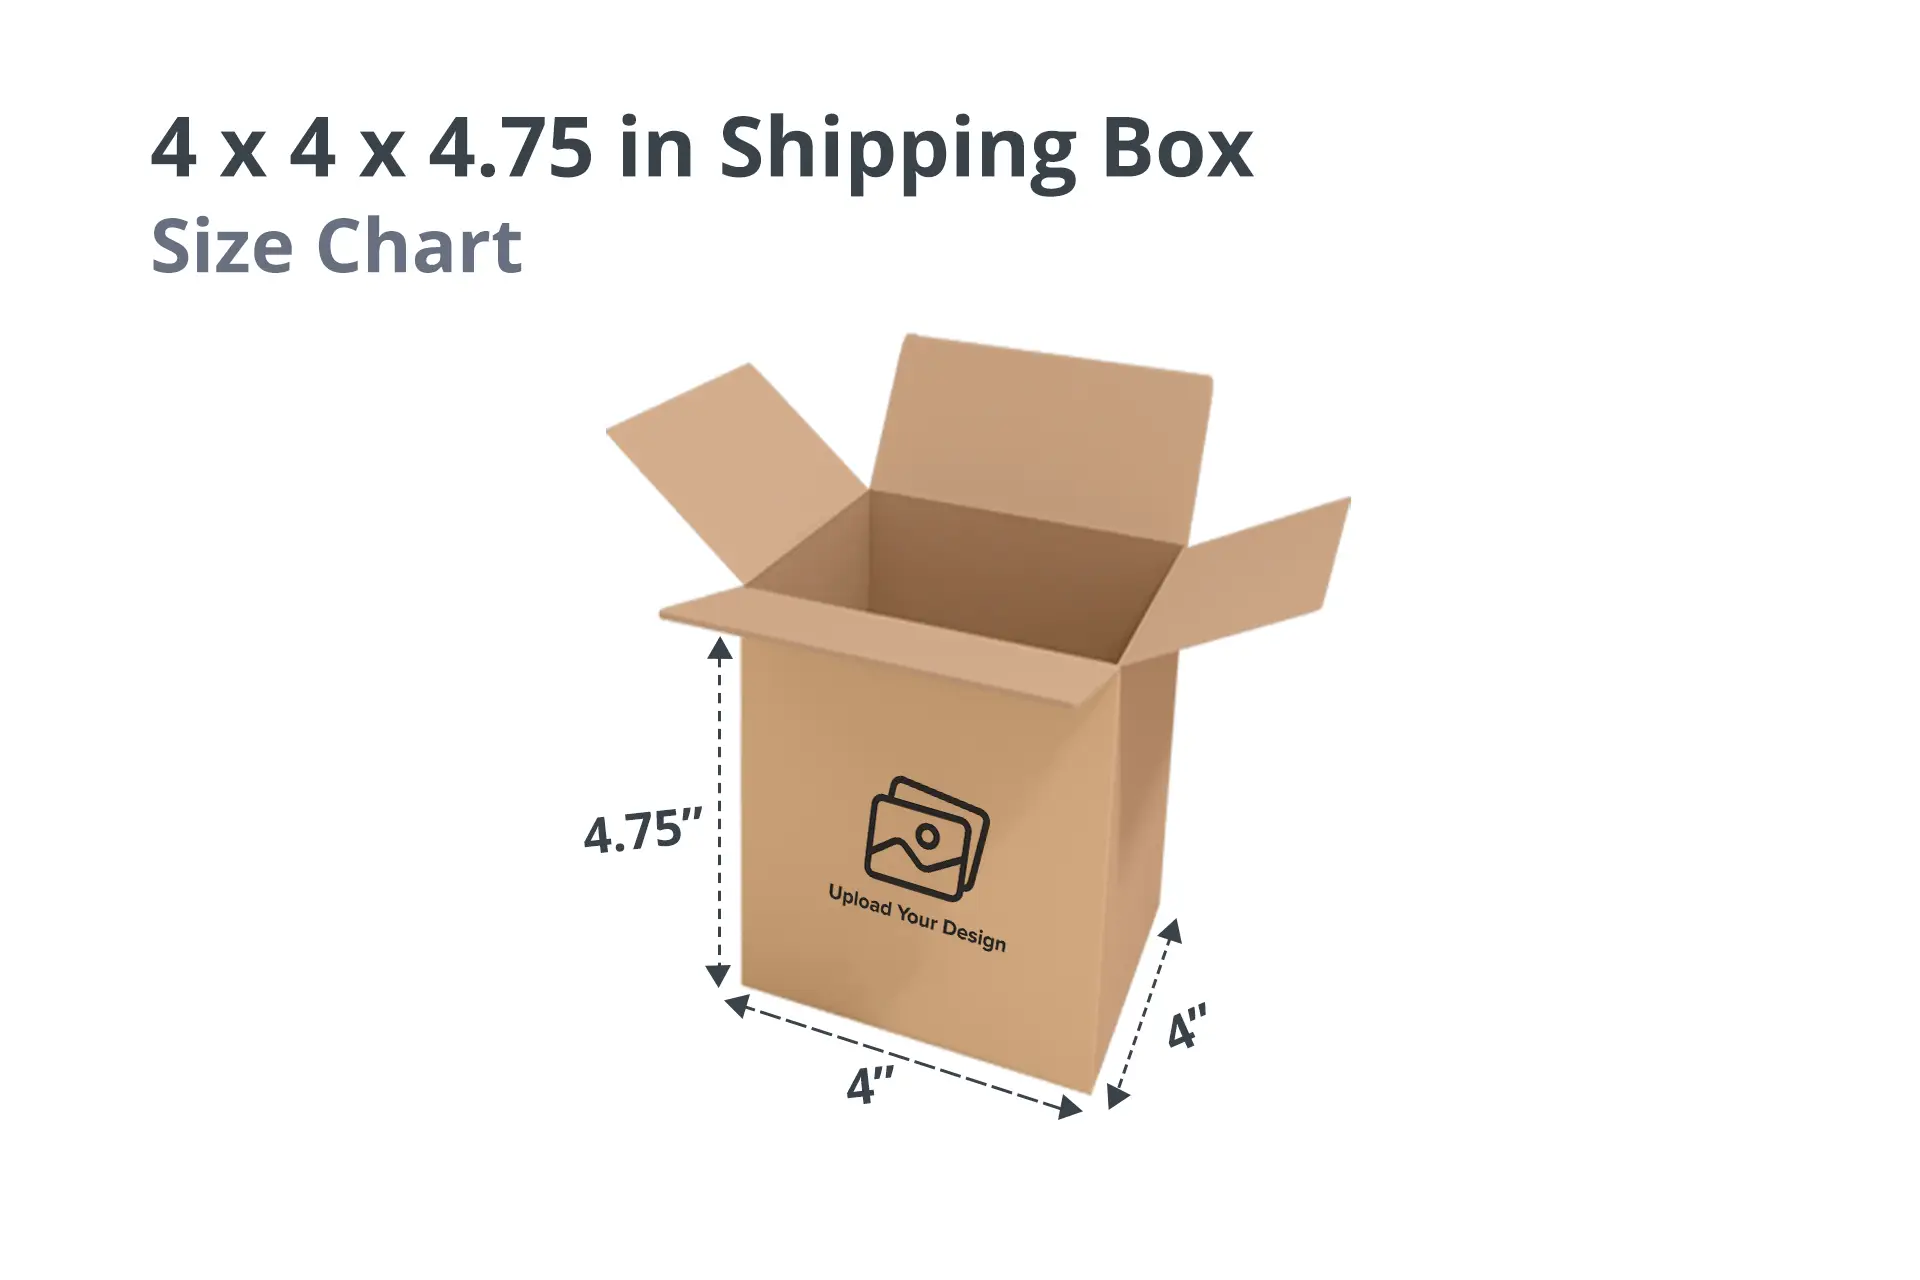 4 x 4 x 4.75 in Shipping Box